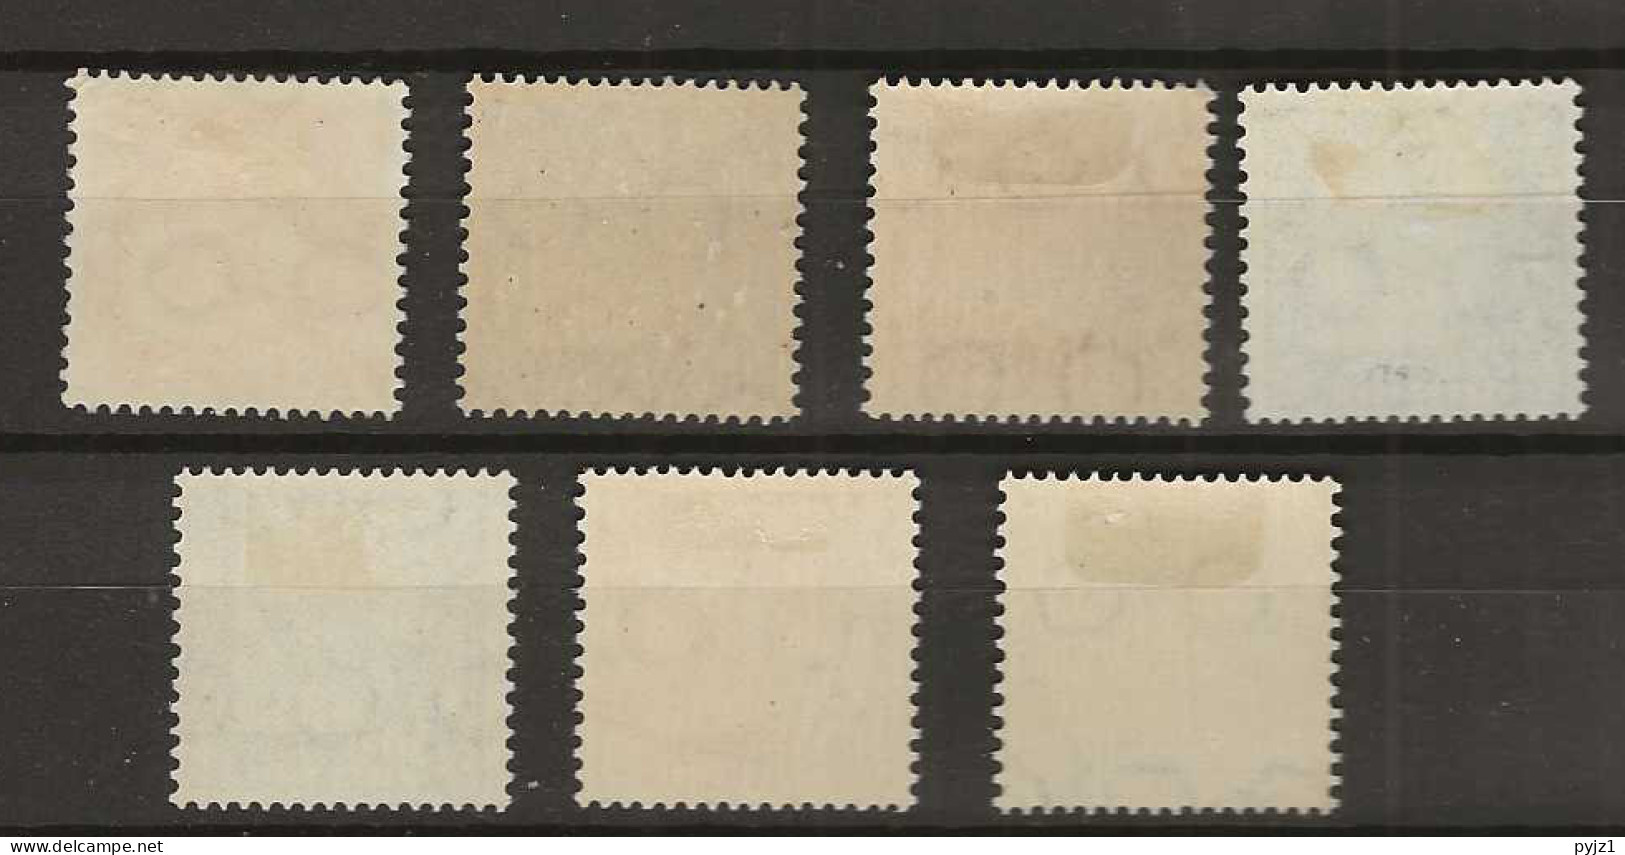 1938 MH Nederlands Indië NVPH 253-59 Watermerk Ringen - Netherlands Indies